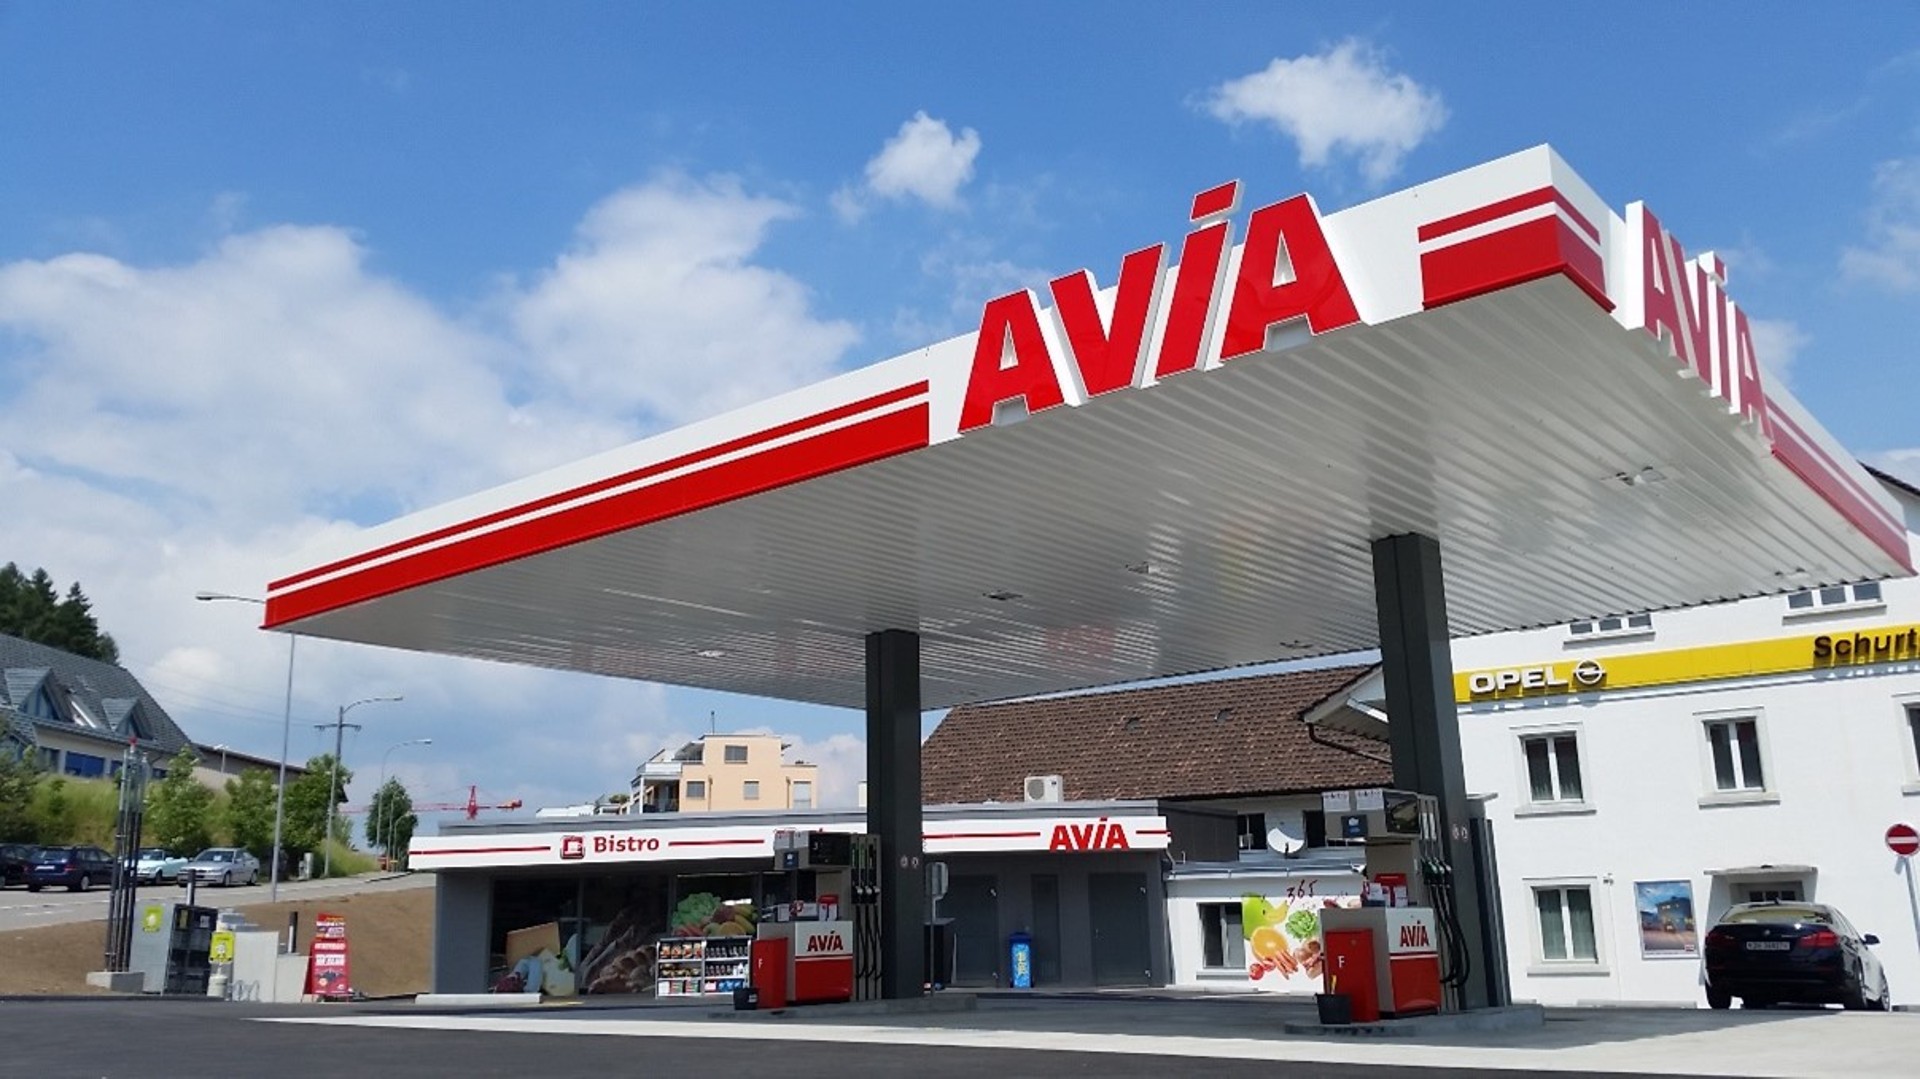 AVIA fuel service station